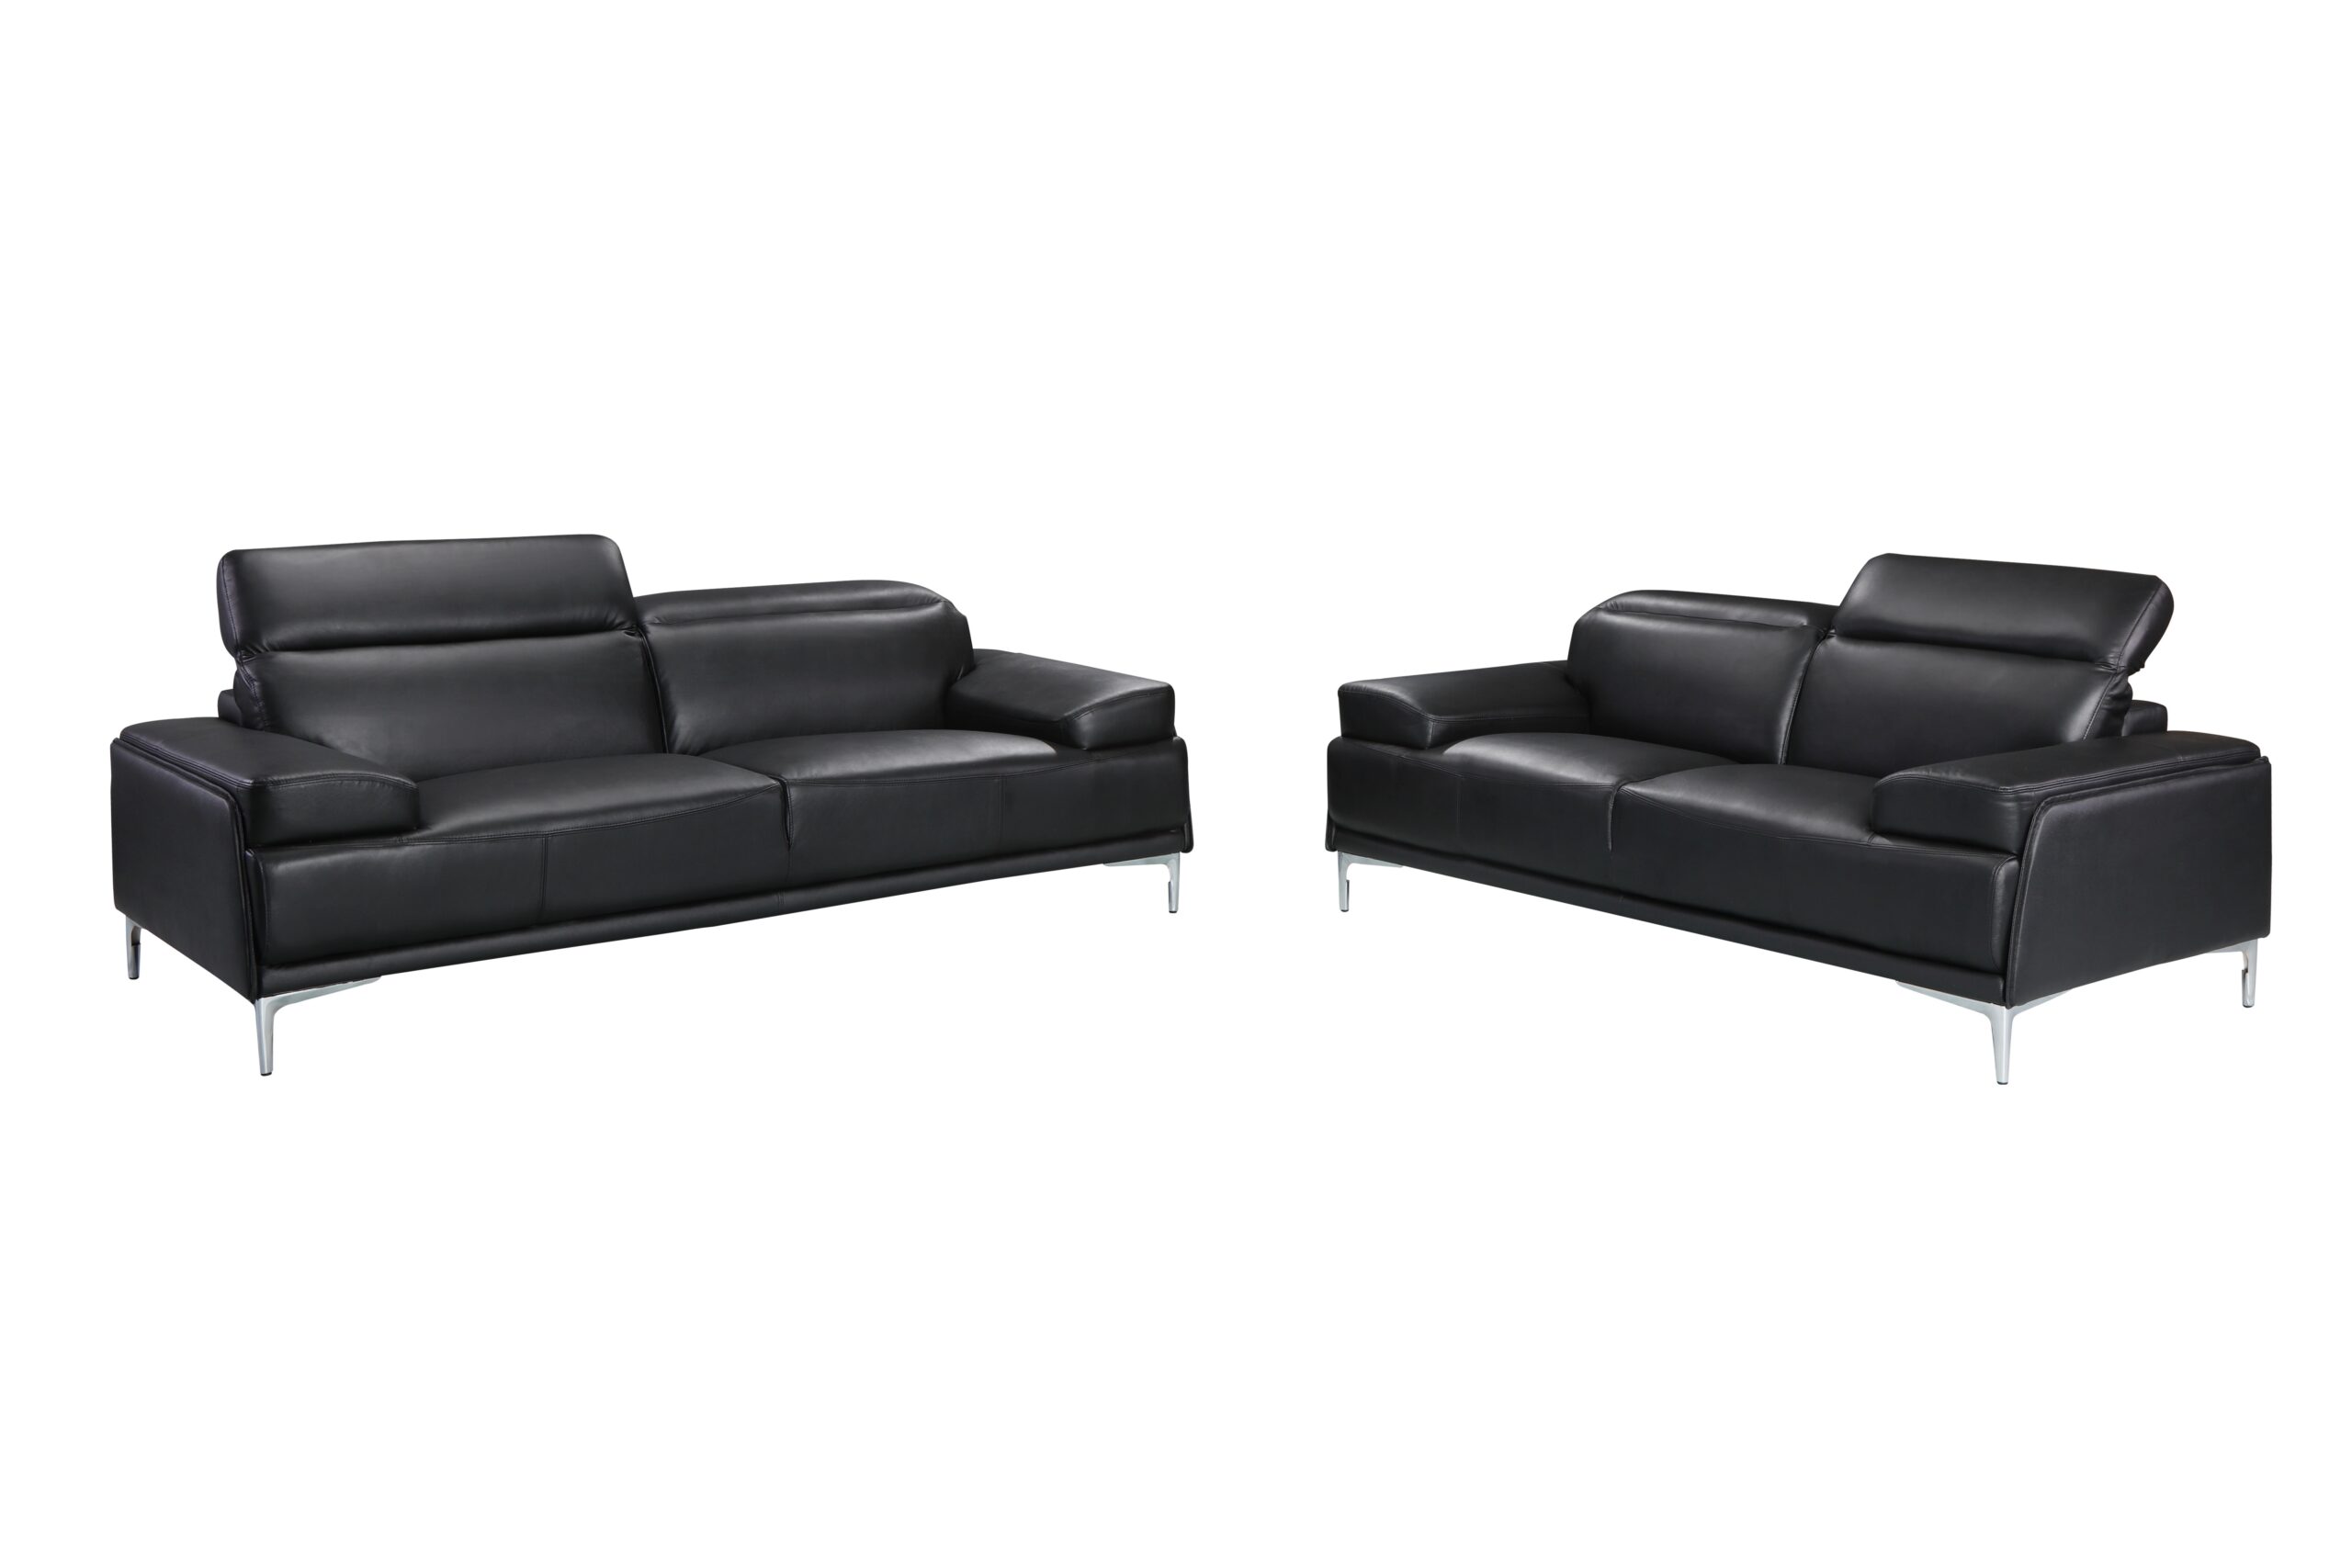 Nicolo Love Seat in Black — buy in NYC - Bellissi Furniture